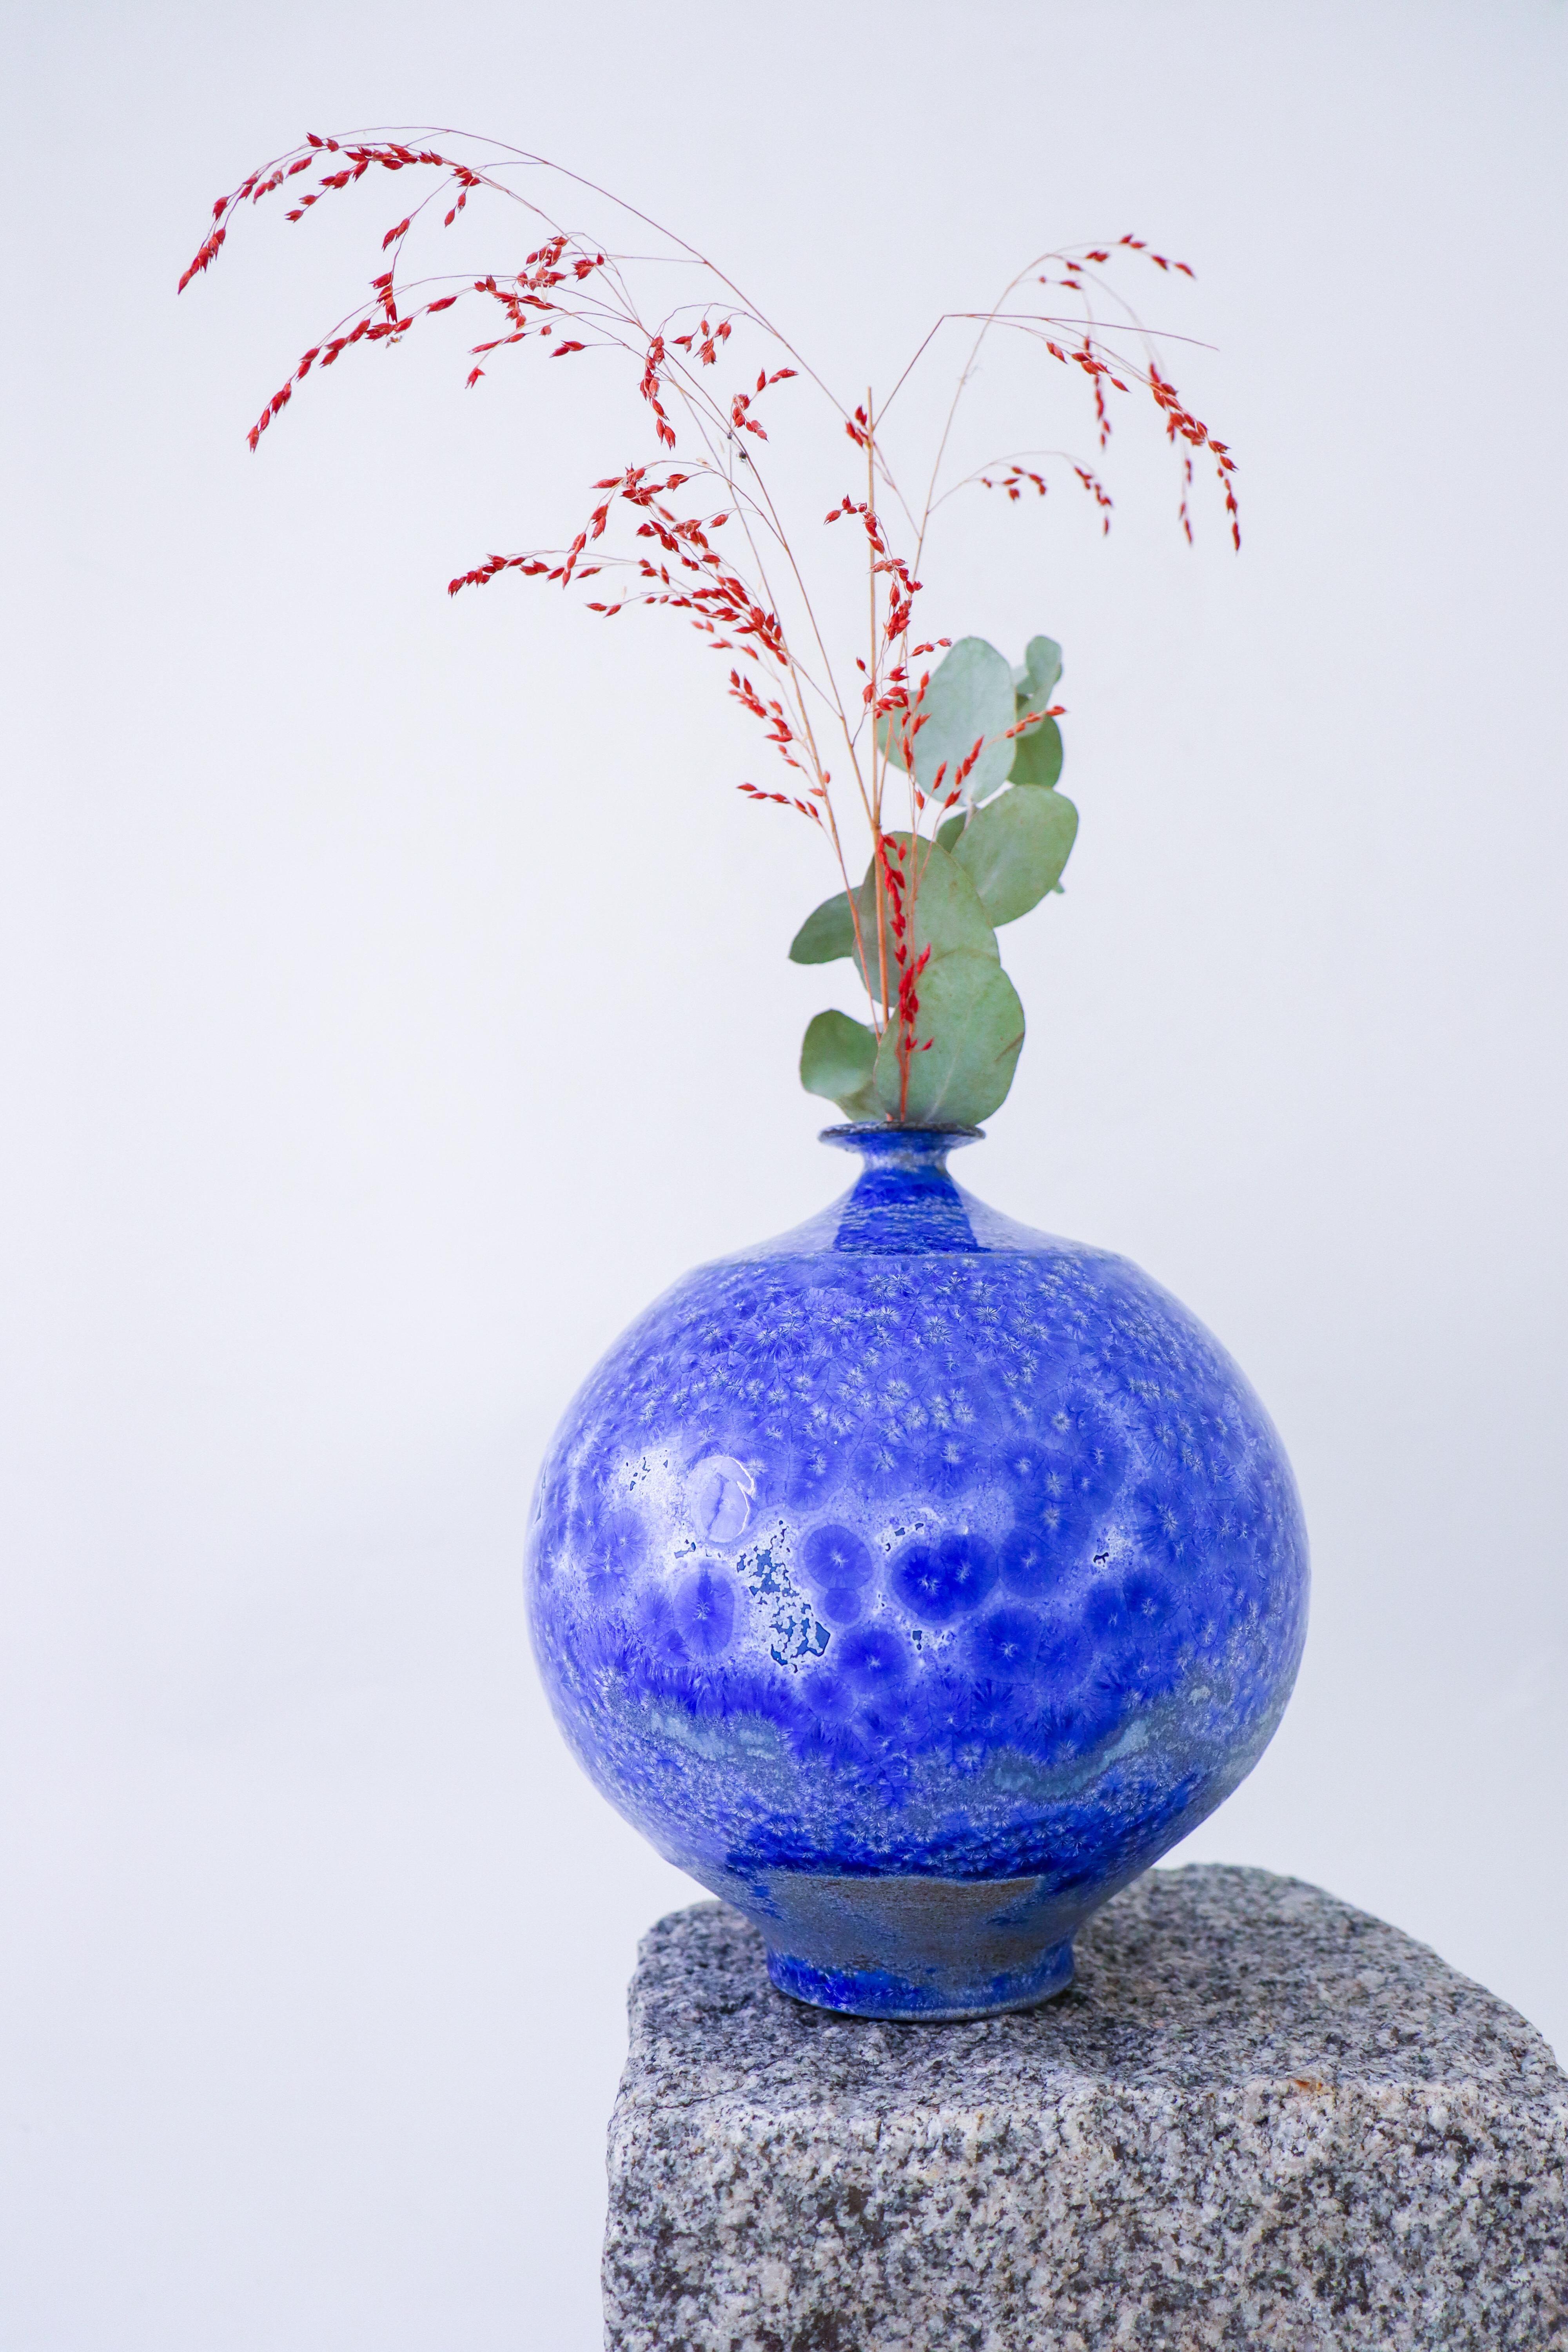 Stoneware Isak Isaksson - Blue Ceramic Vase - Crystalline Glaze - Contemporary Artist For Sale